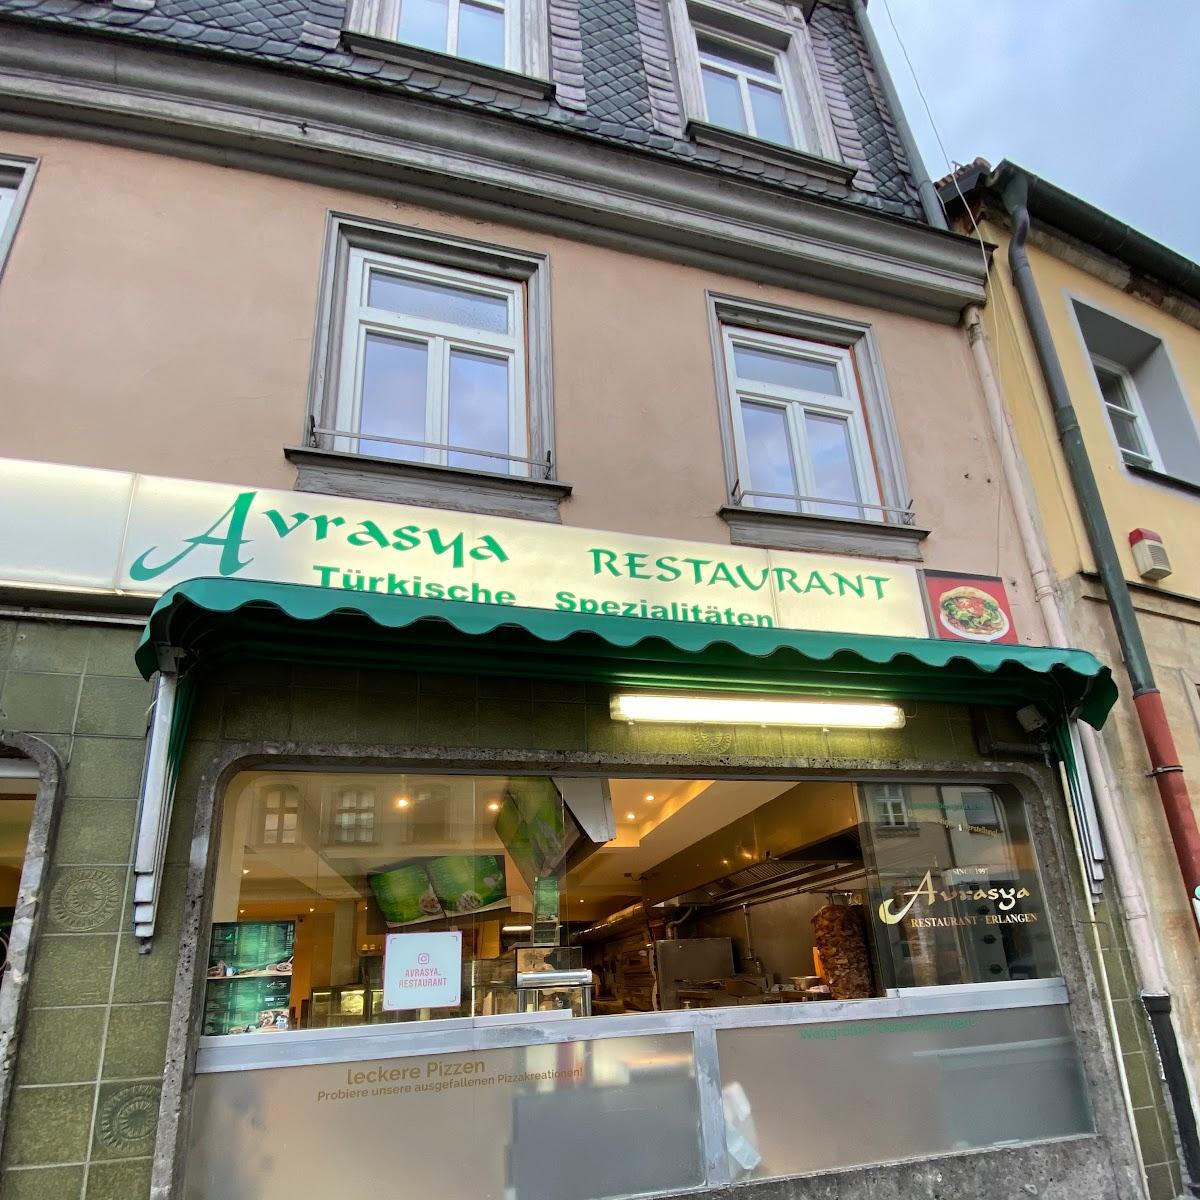 Restaurant "Avrasya Restaurant" in Erlangen